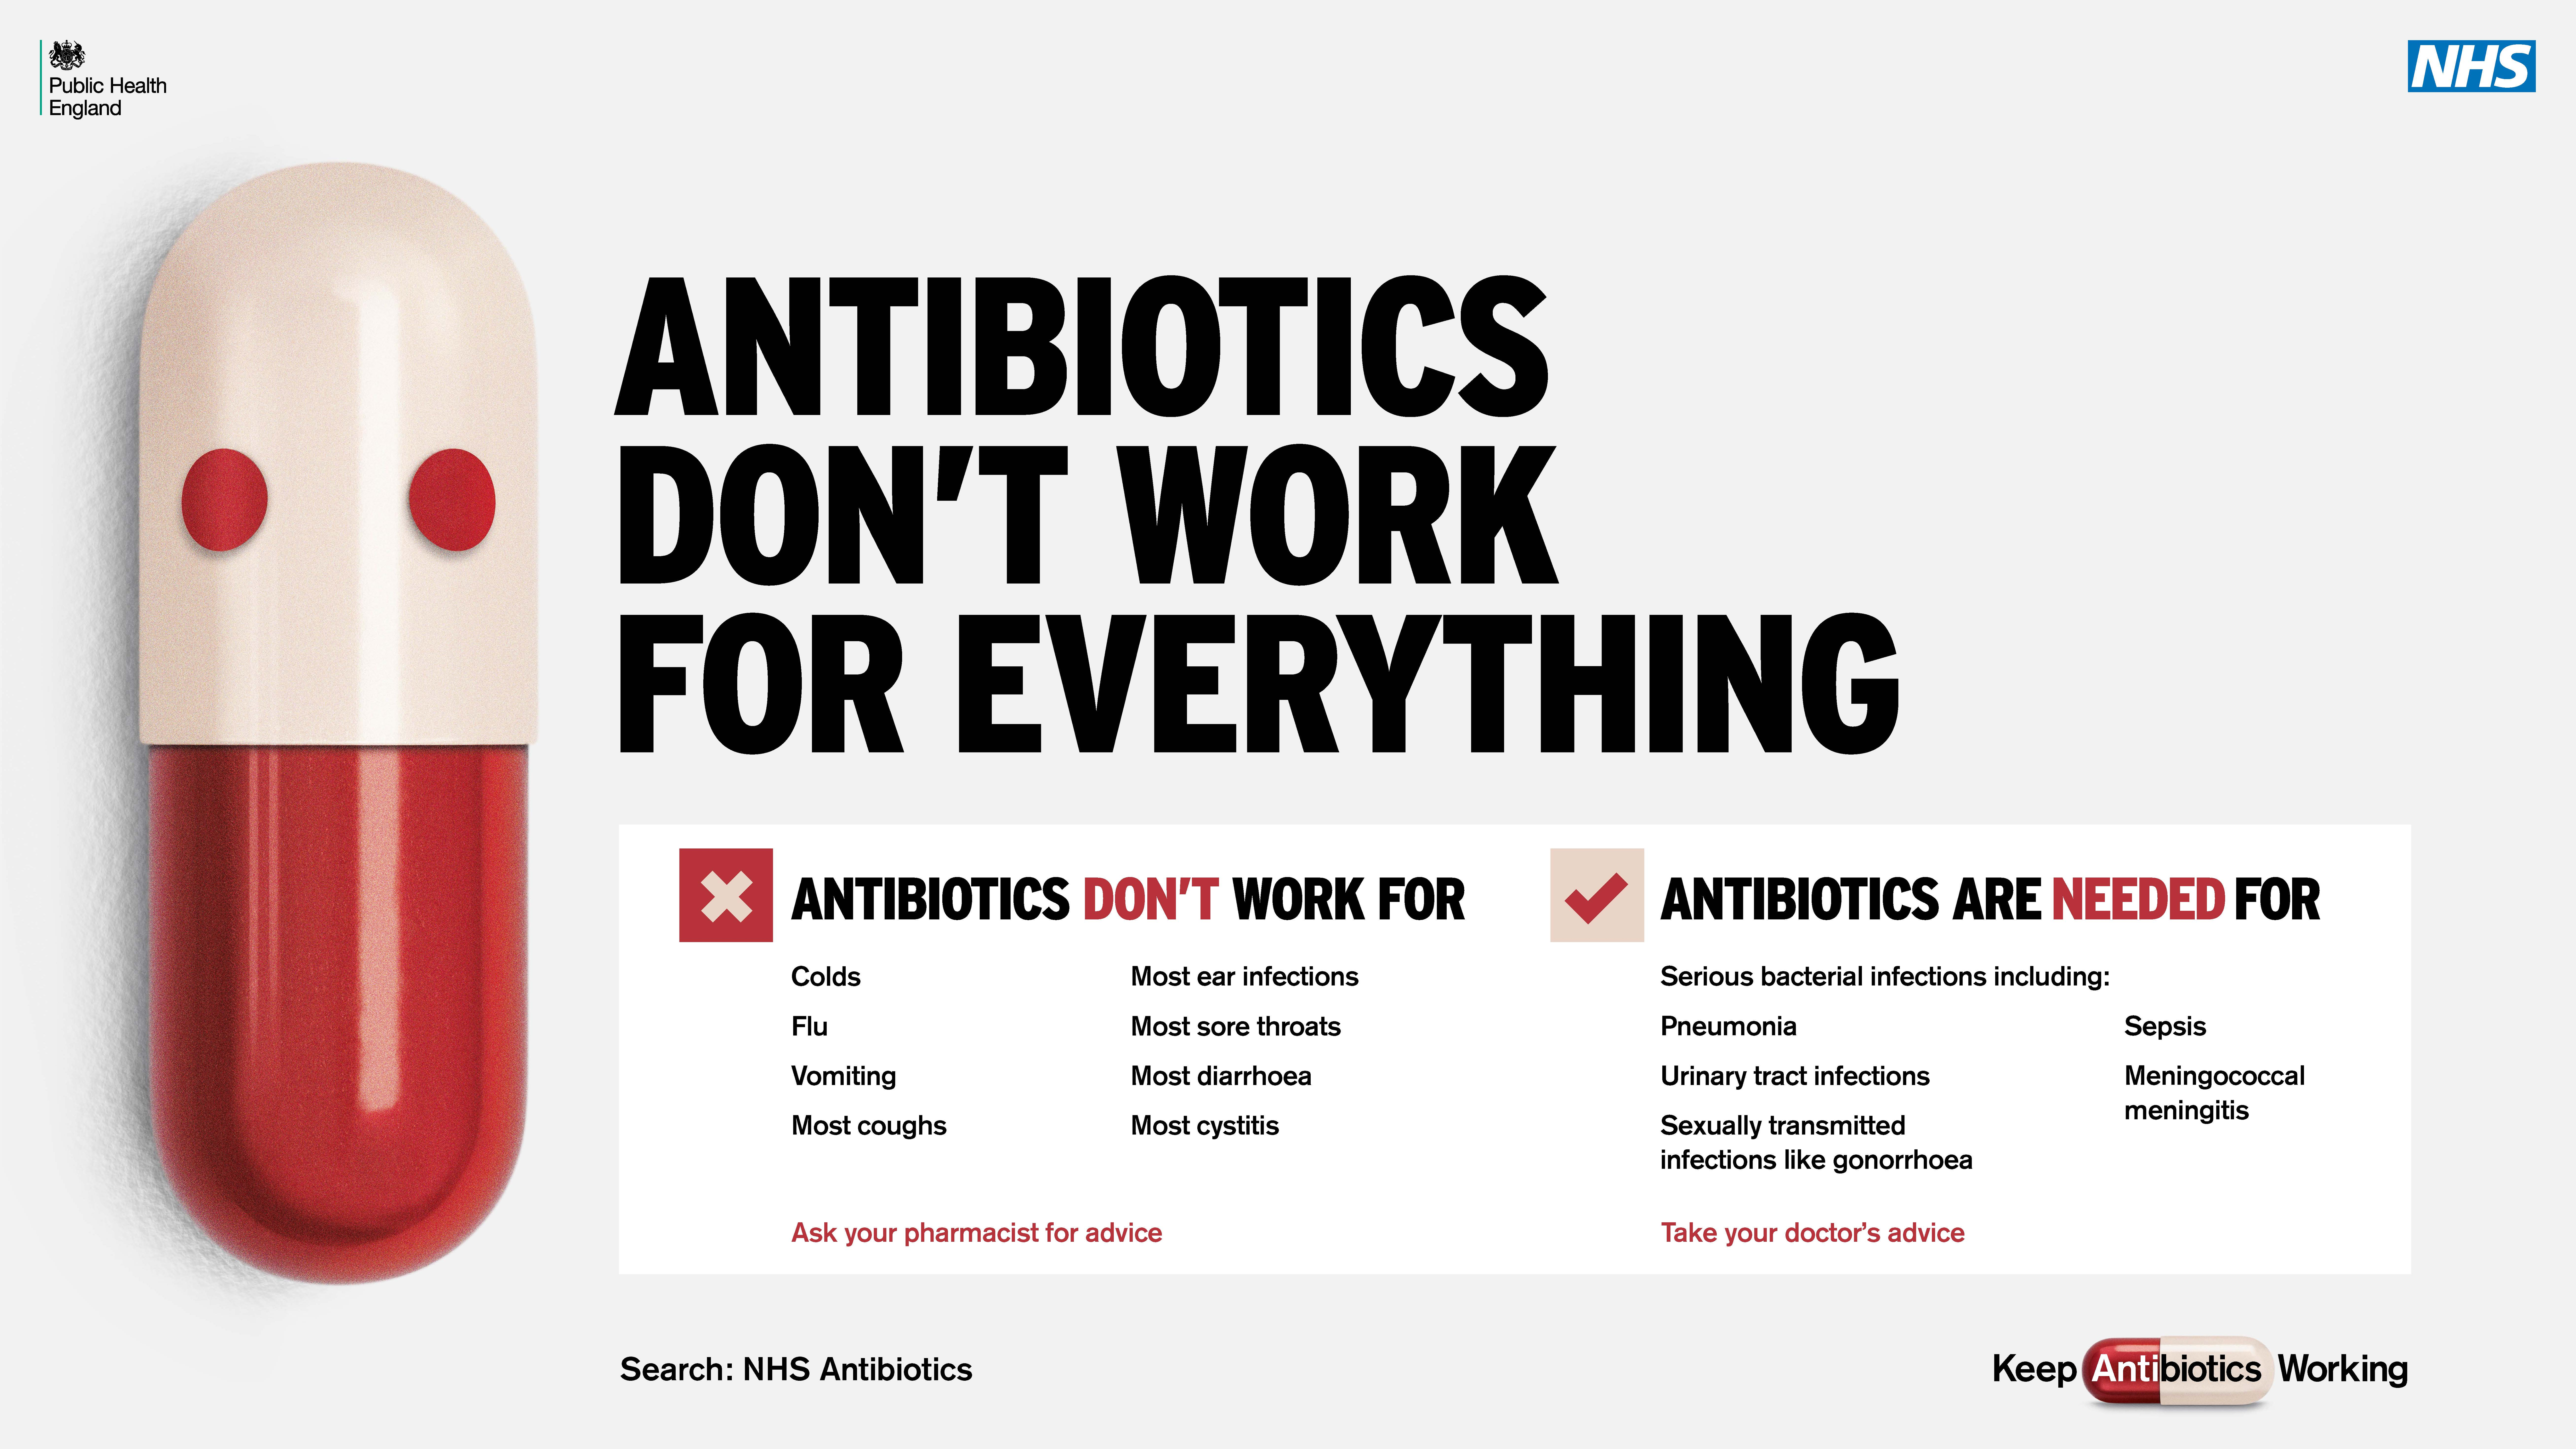 Wirral Medicines Management - Antibiotic Resources